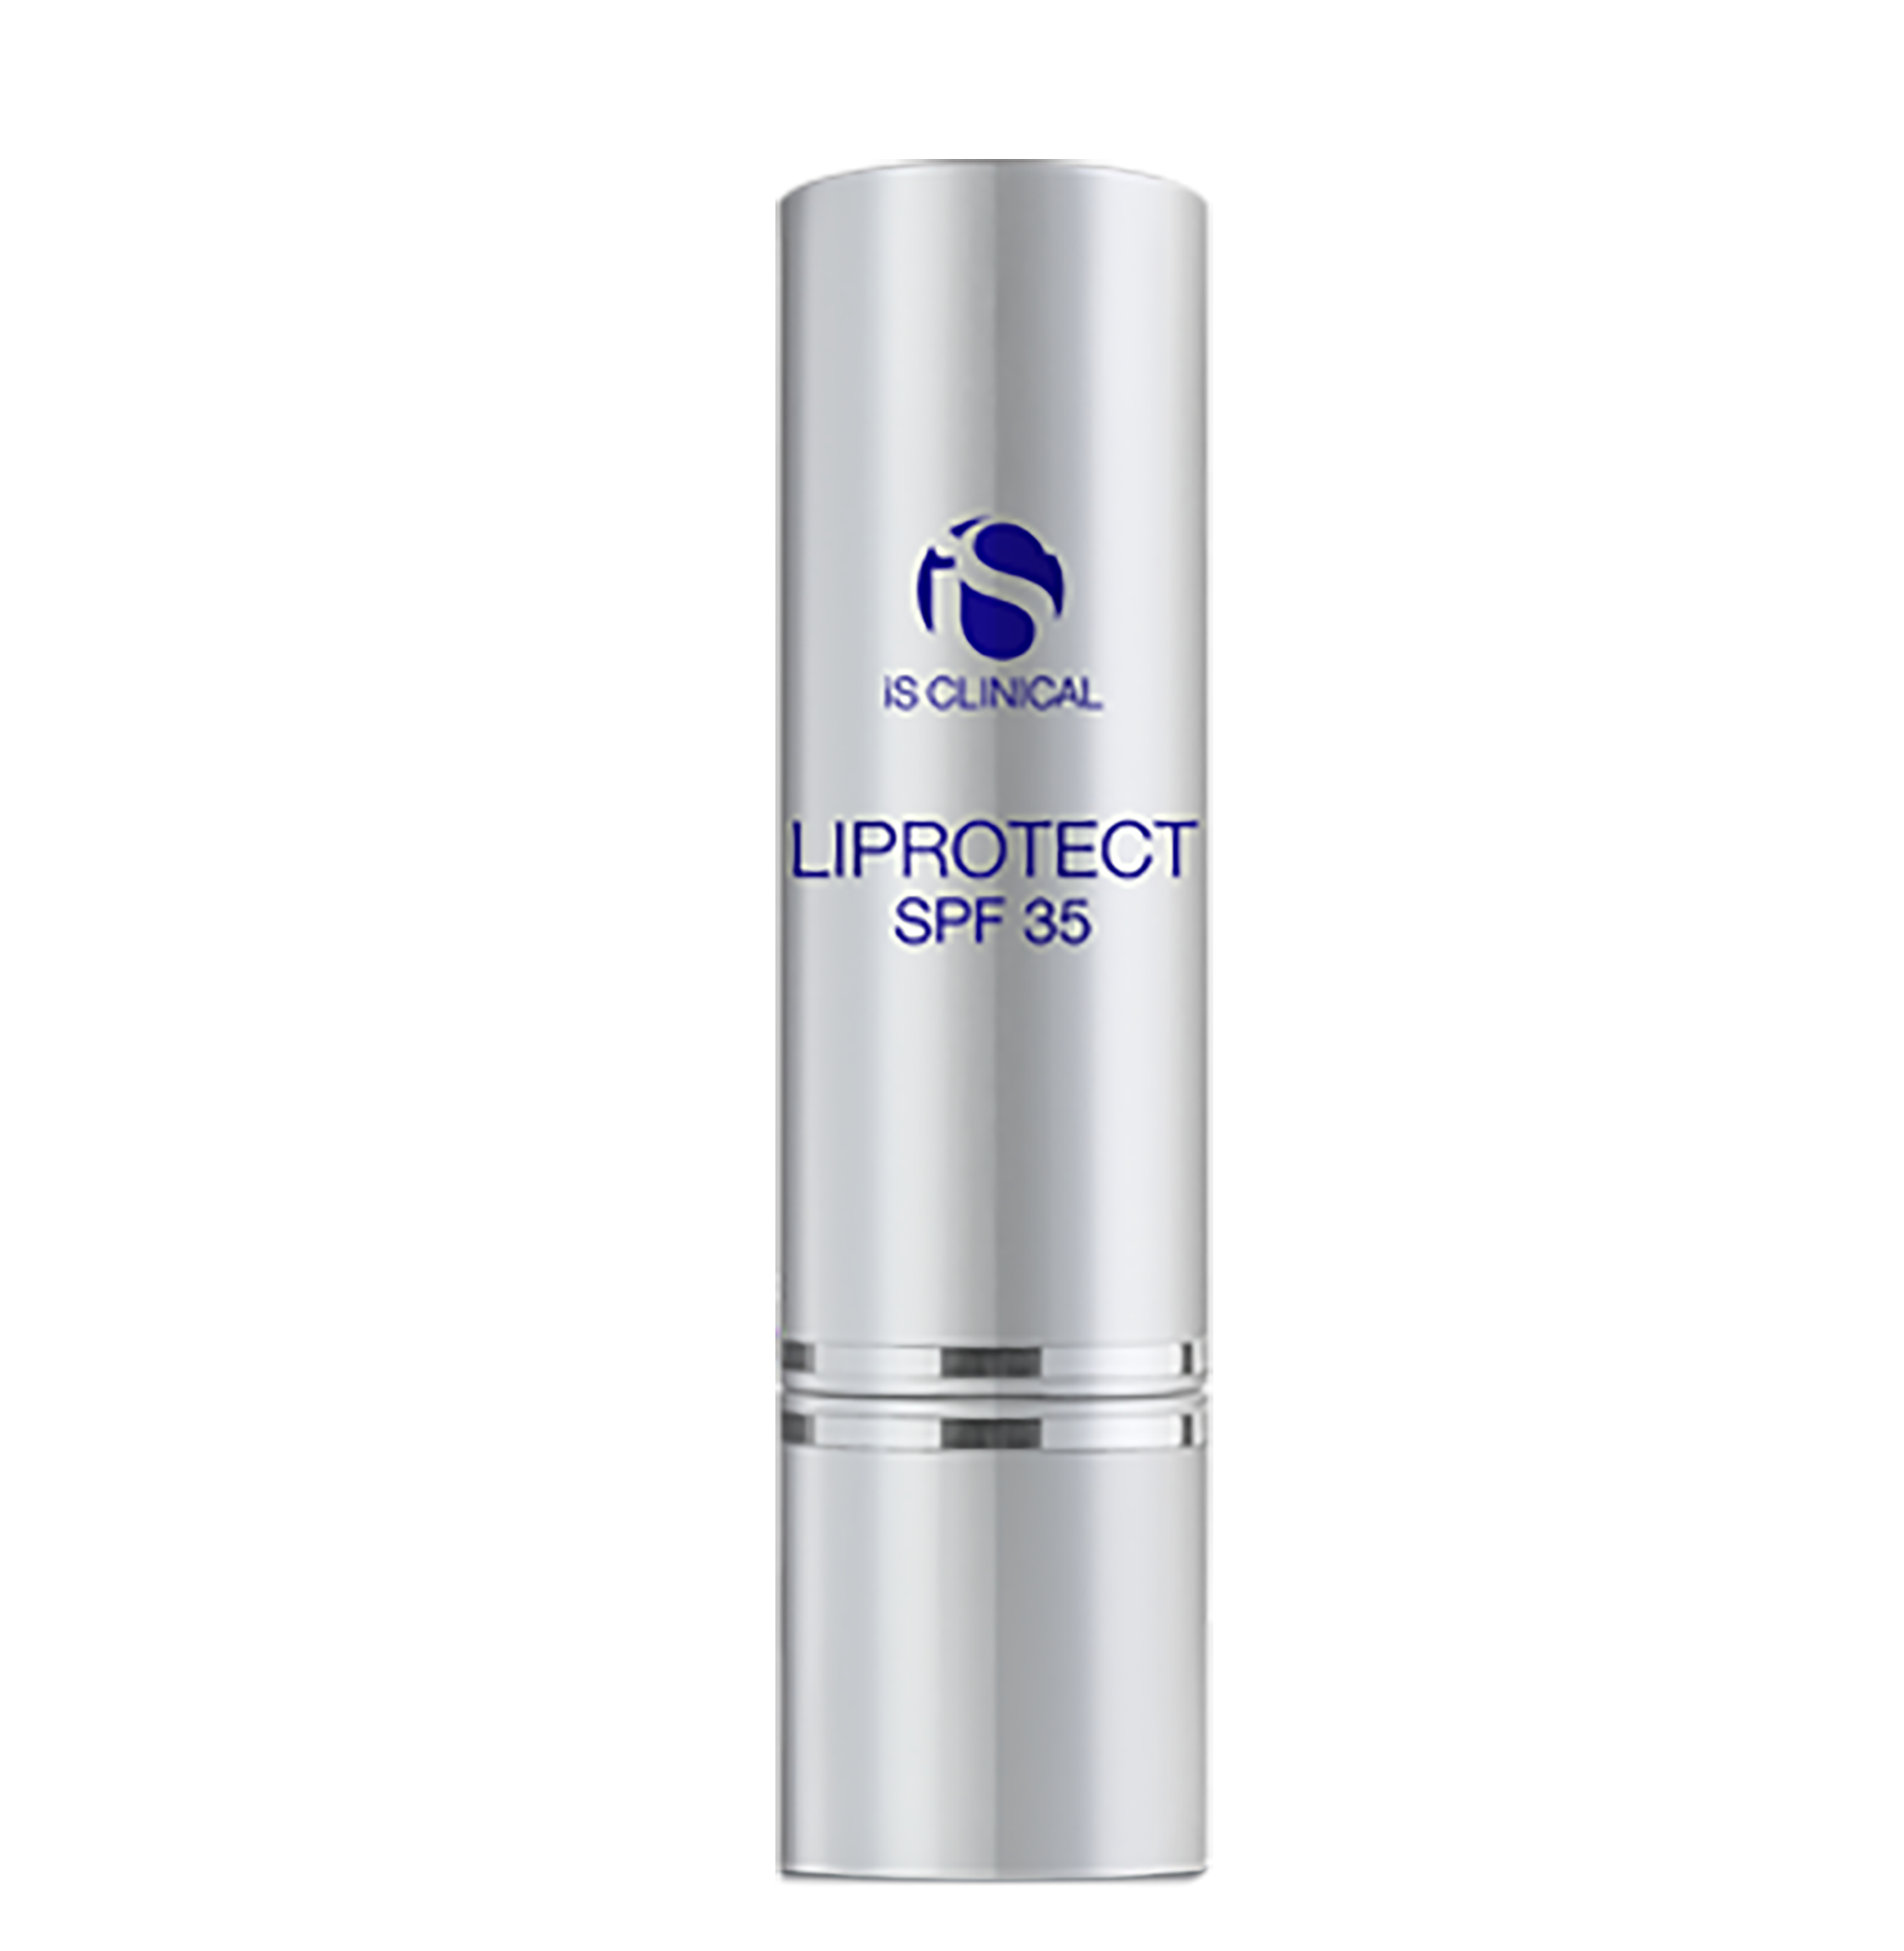 LiProtect SPF 35 5g